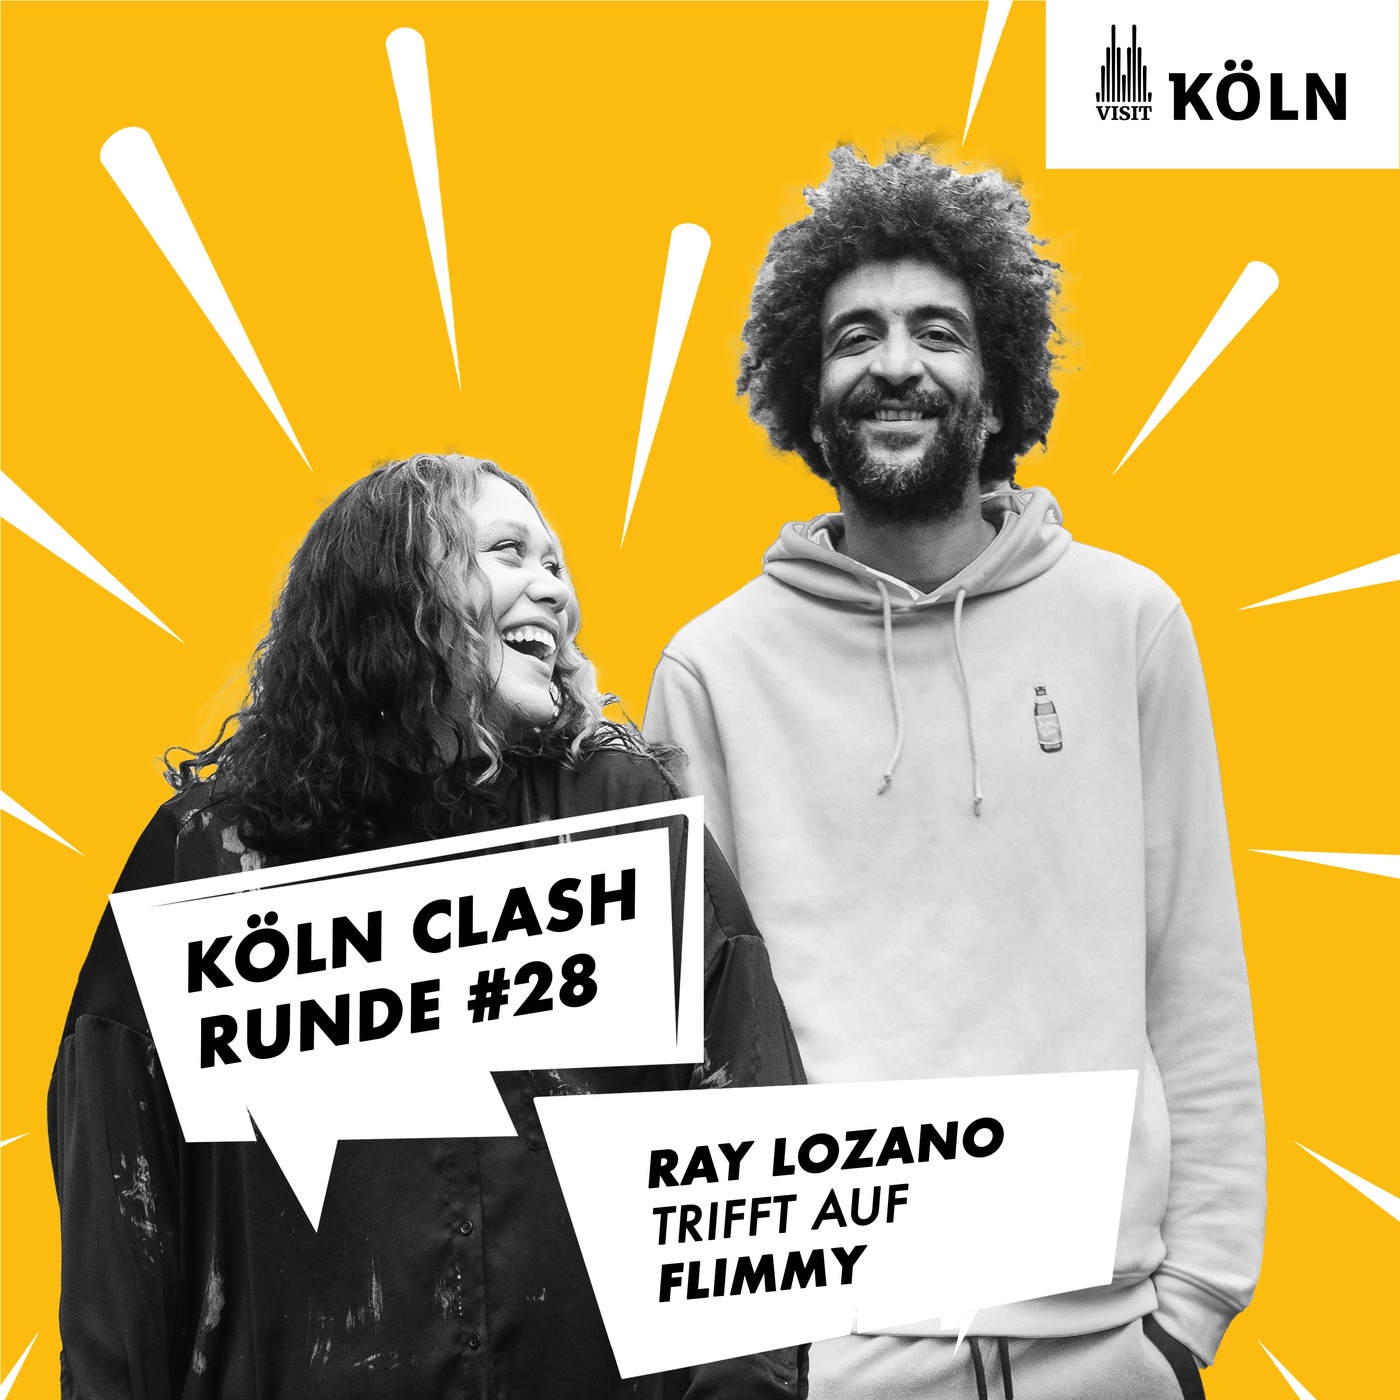 Köln Clash, Runde #28 - Ray Lozano trifft auf Flimmy